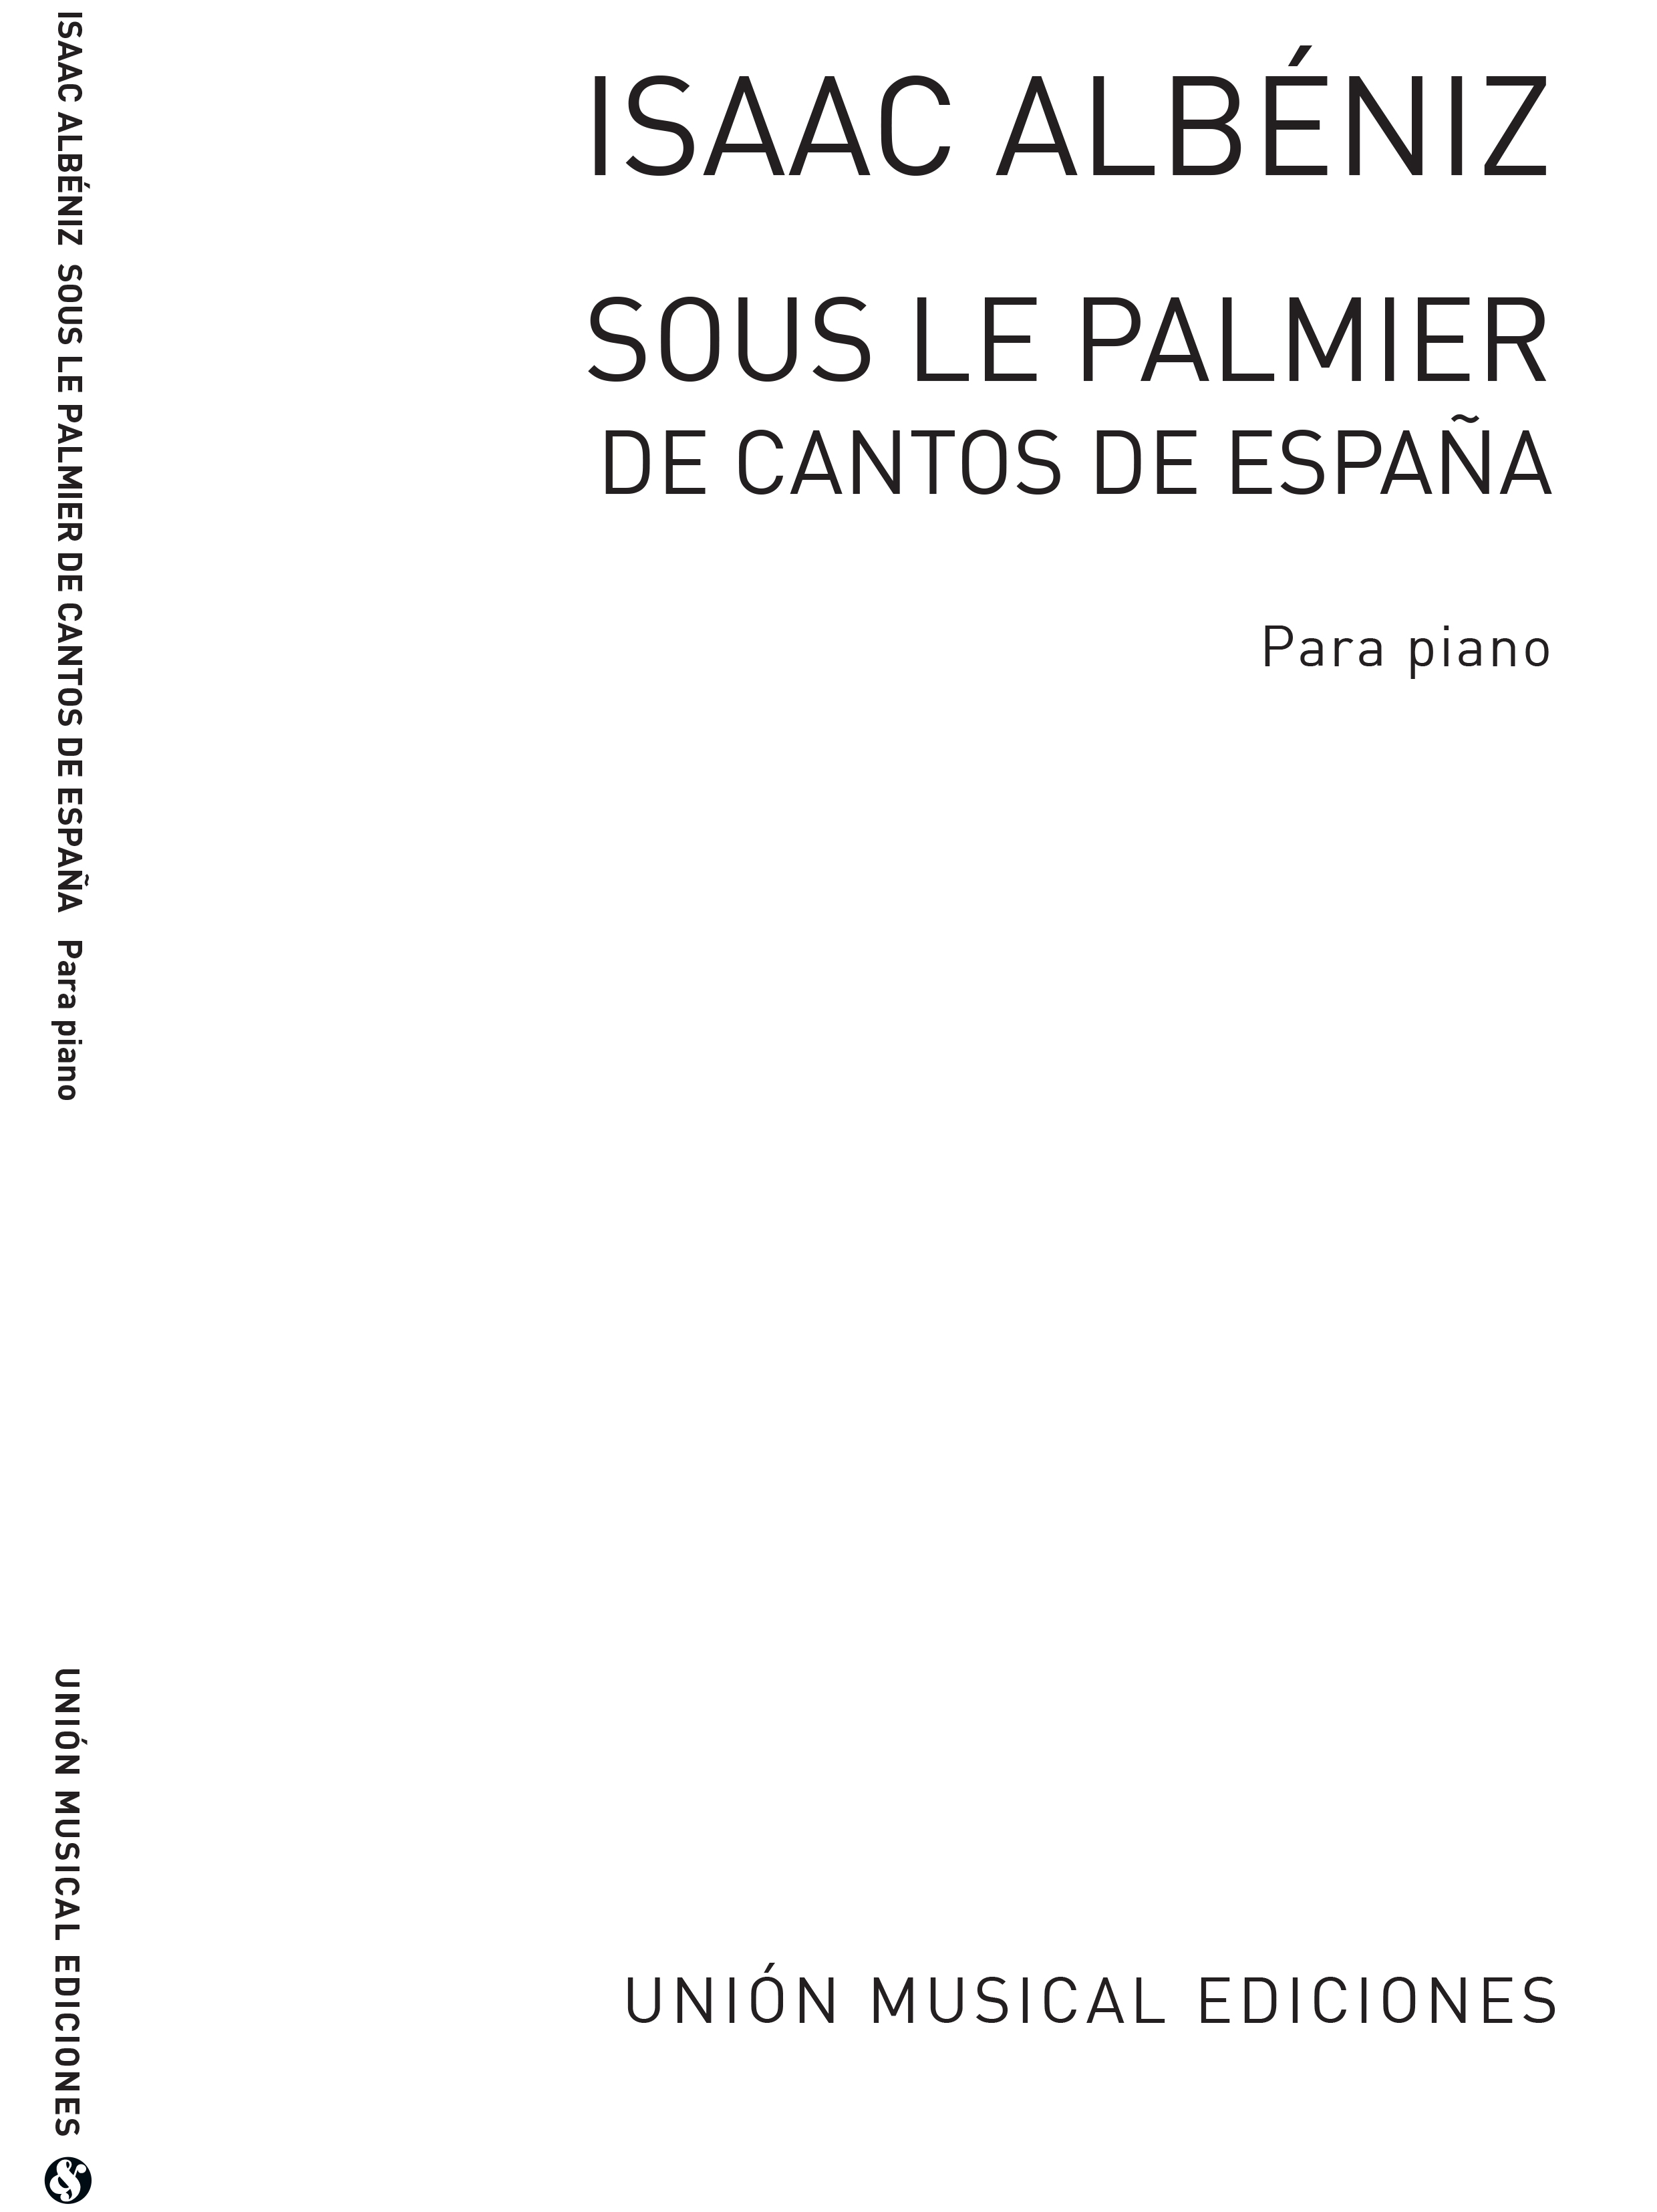 Isaac Albniz: Sous La Palmier No.3 From Cantos De Espana Op.232: Piano: